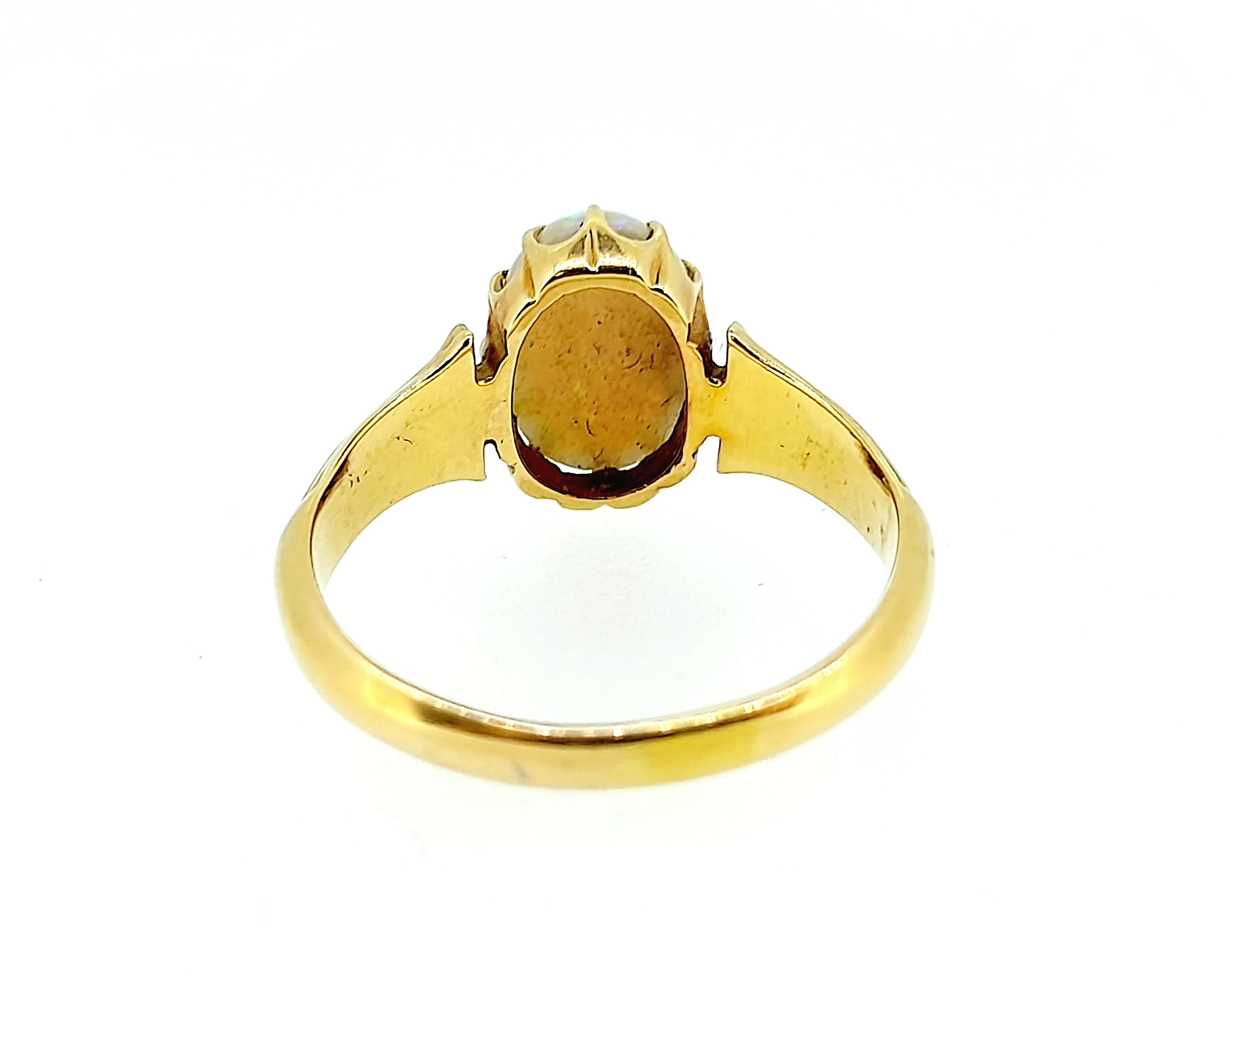 A single stone opal dress ring, - Image 4 of 4